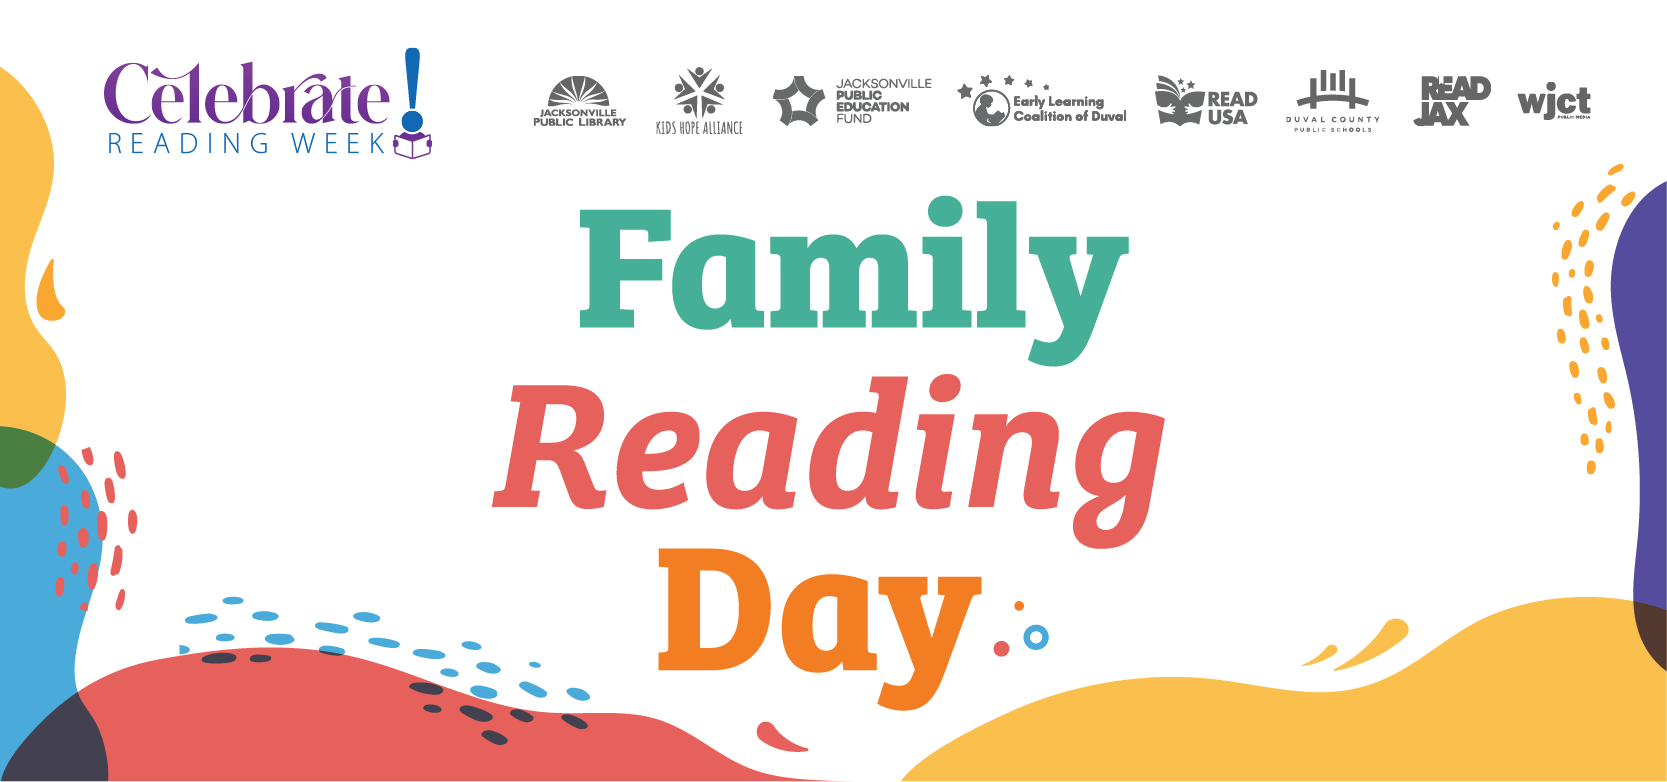 Celebrate Reading Week Family Reading Day